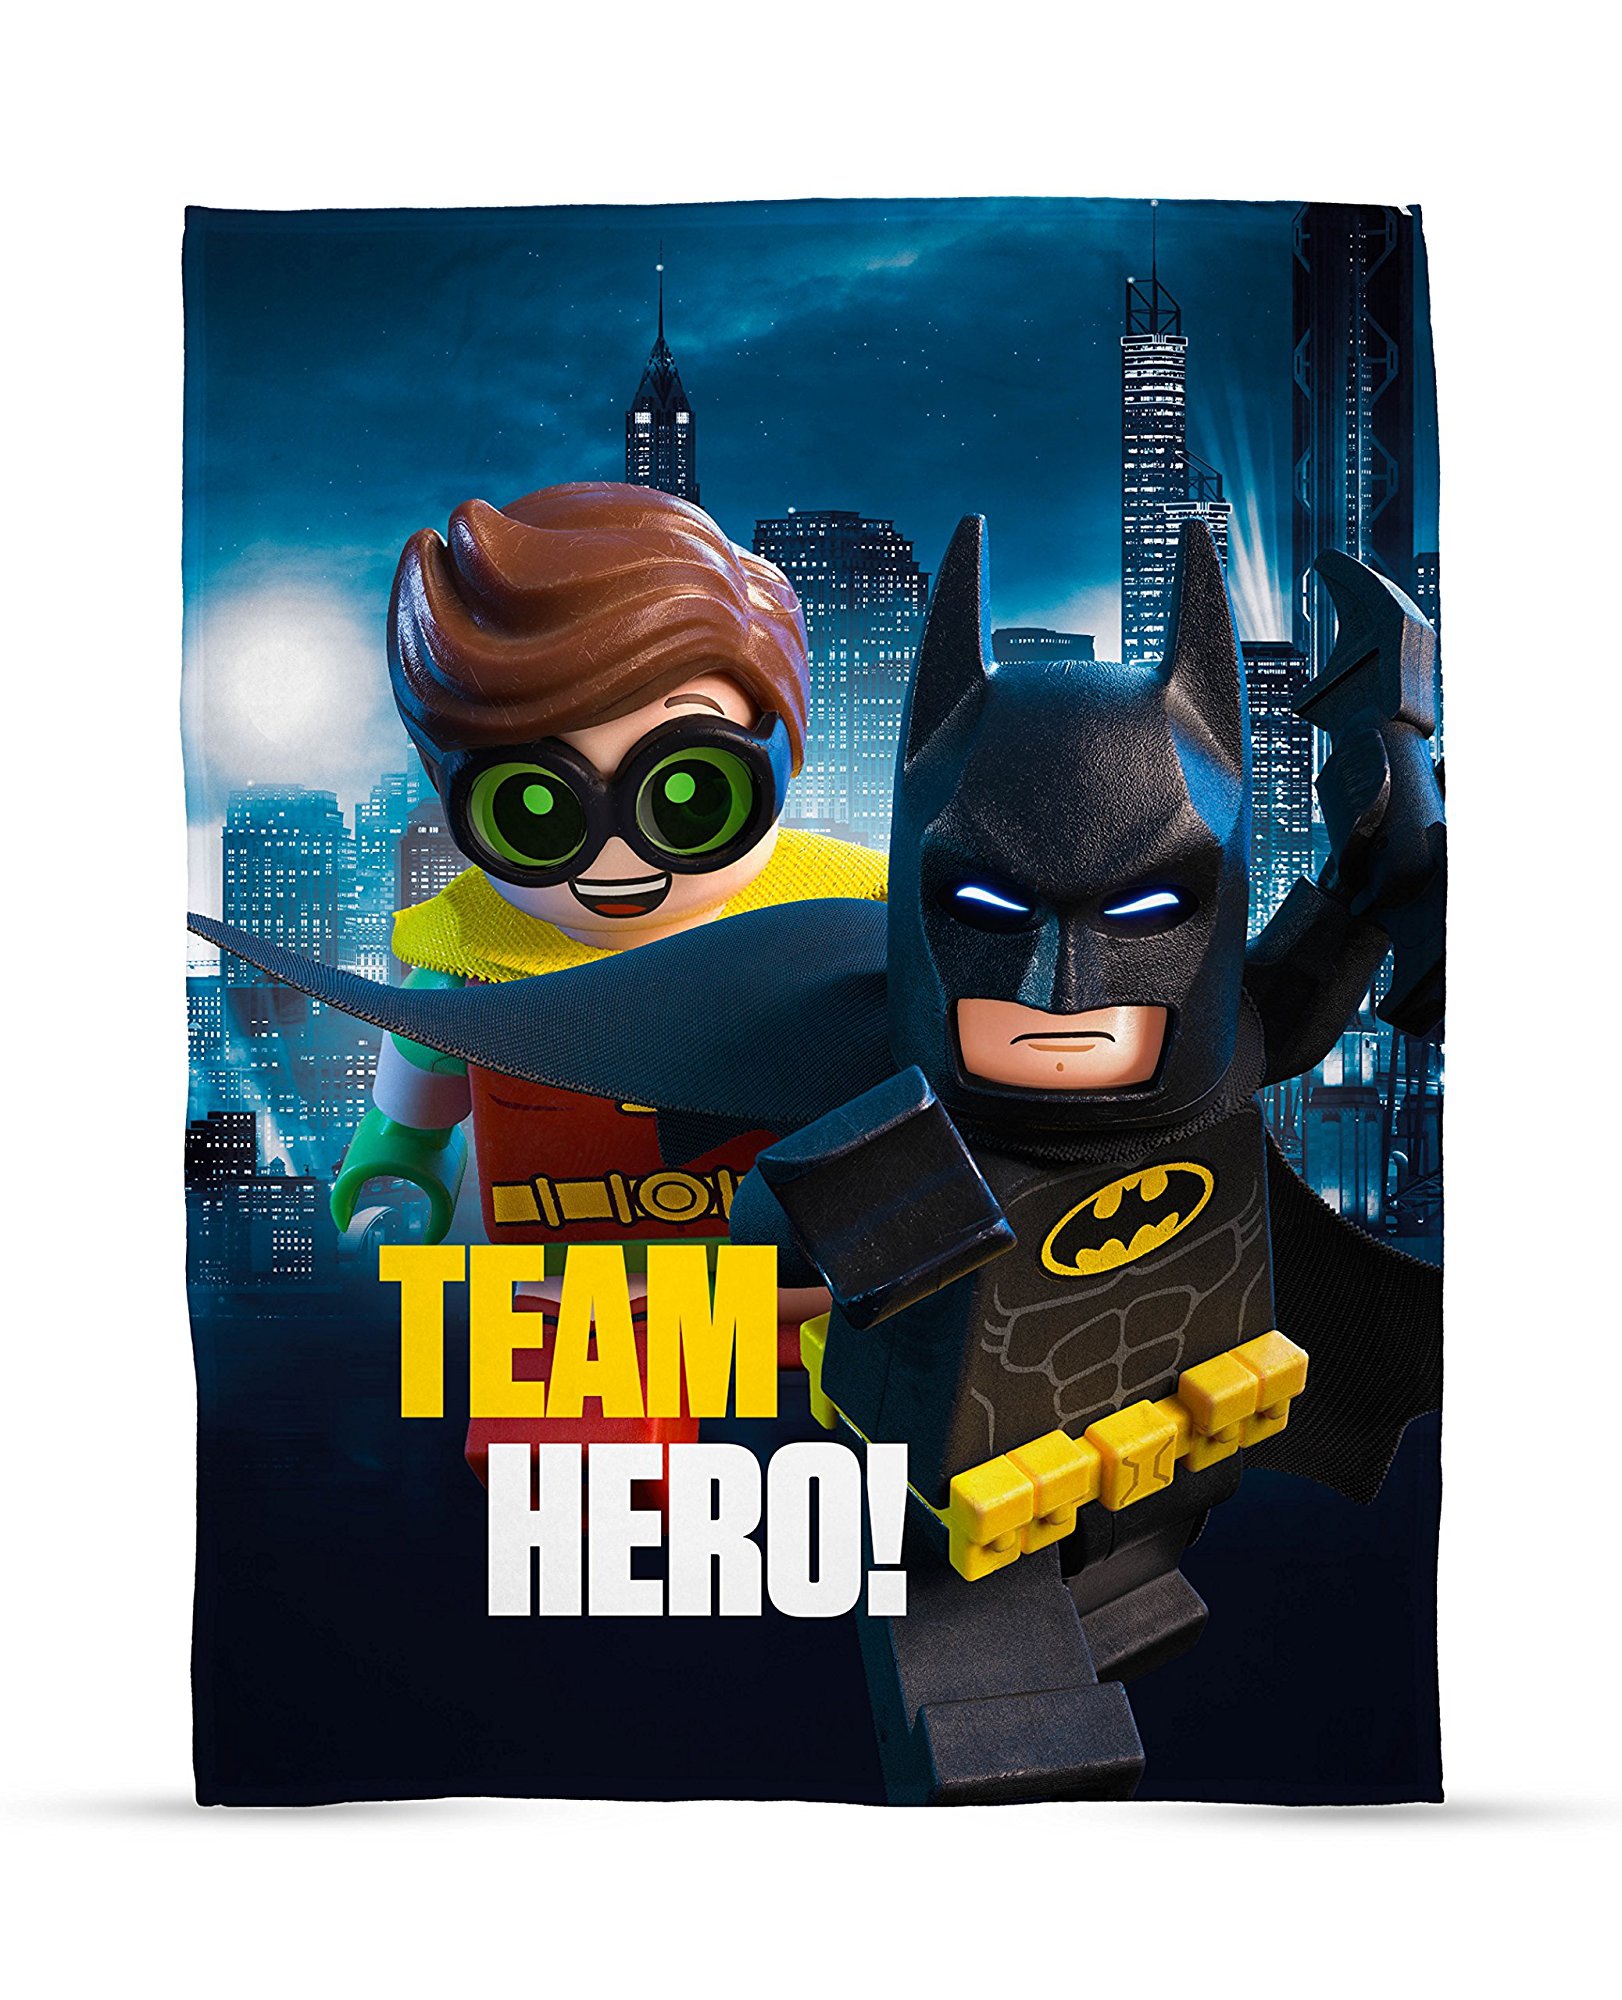 Lego Batman Movie 'Hero' Panel Fleece Blanket Throw